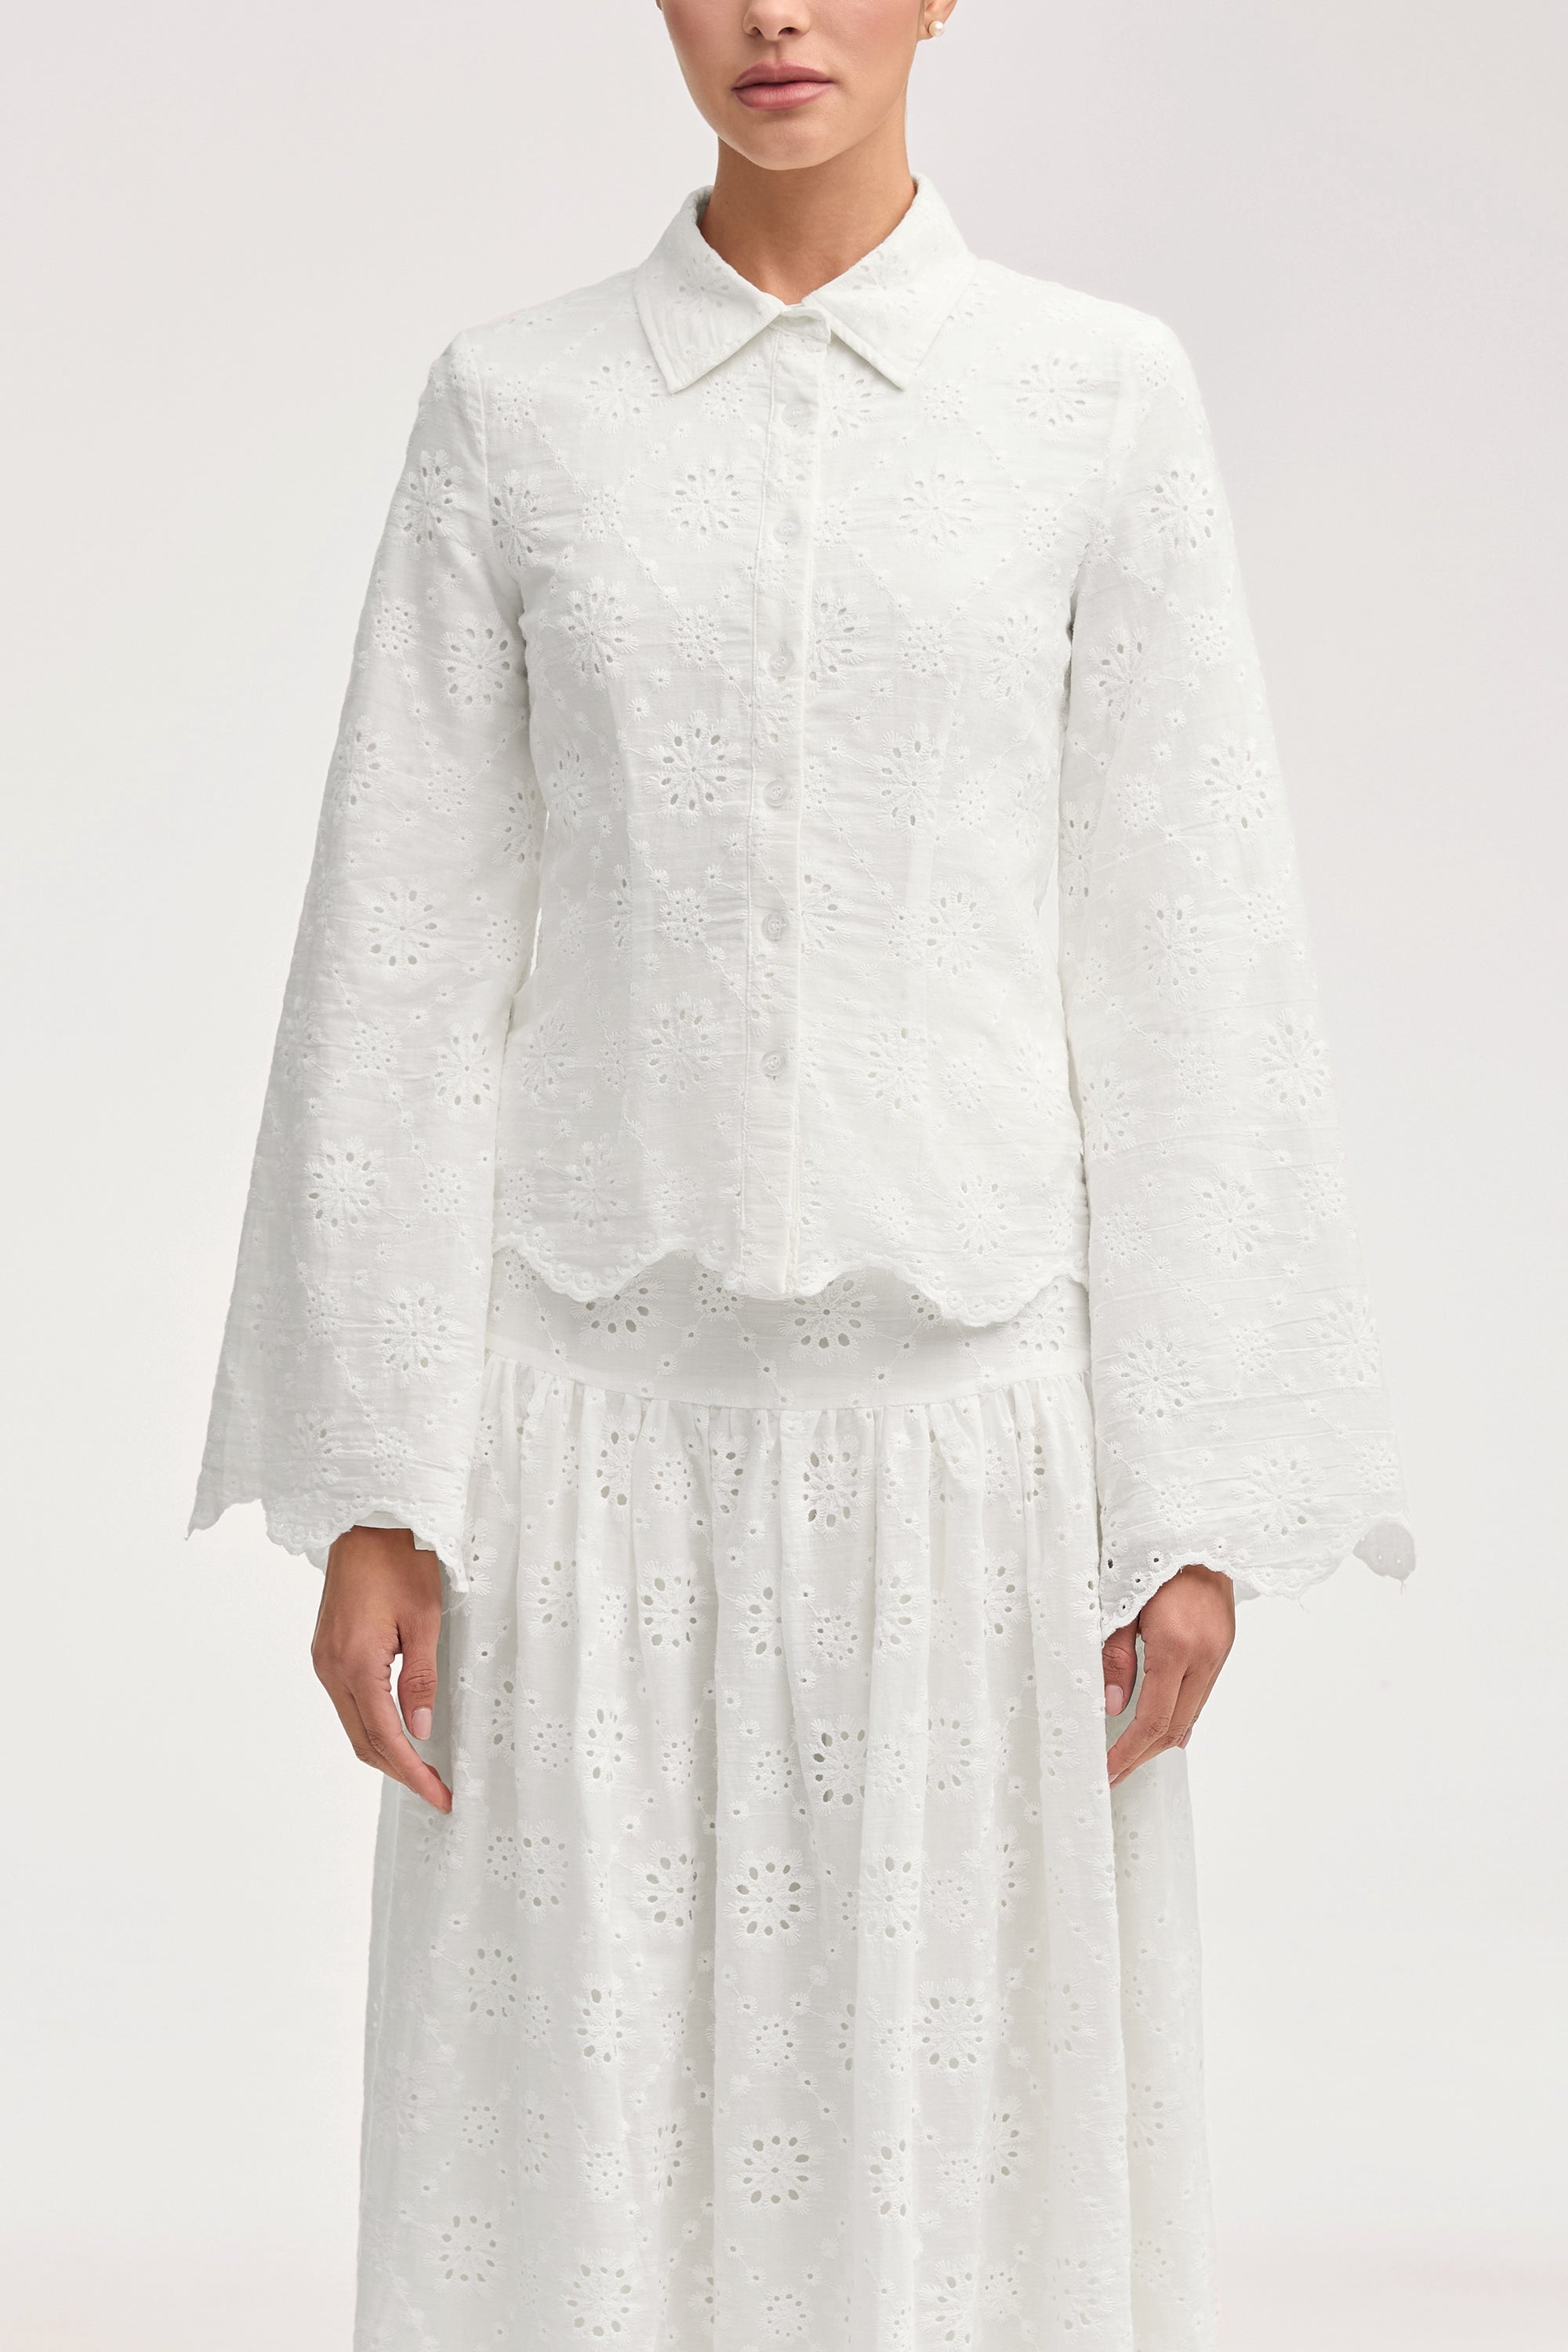 Halima White Eyelet Button Down Top Clothing Veiled 